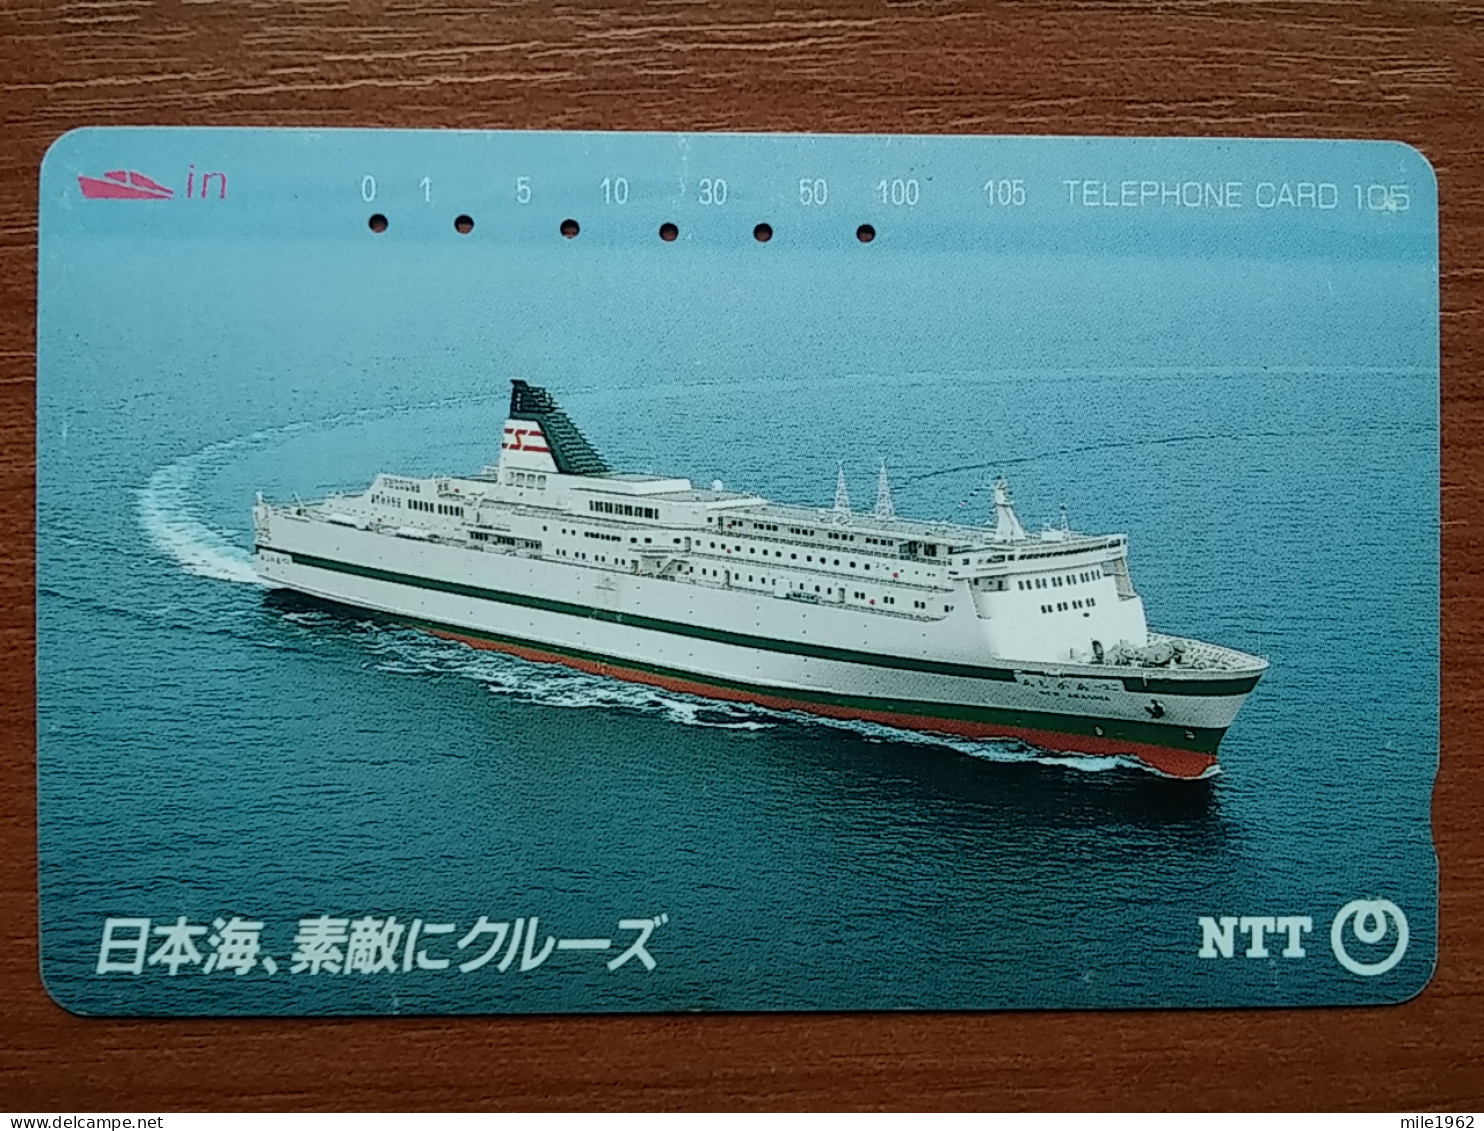 T-357 - JAPAN, Japon, Nipon, TELECARD, PHONECARD,  NTT 330-302, Ship, Navire - Barche